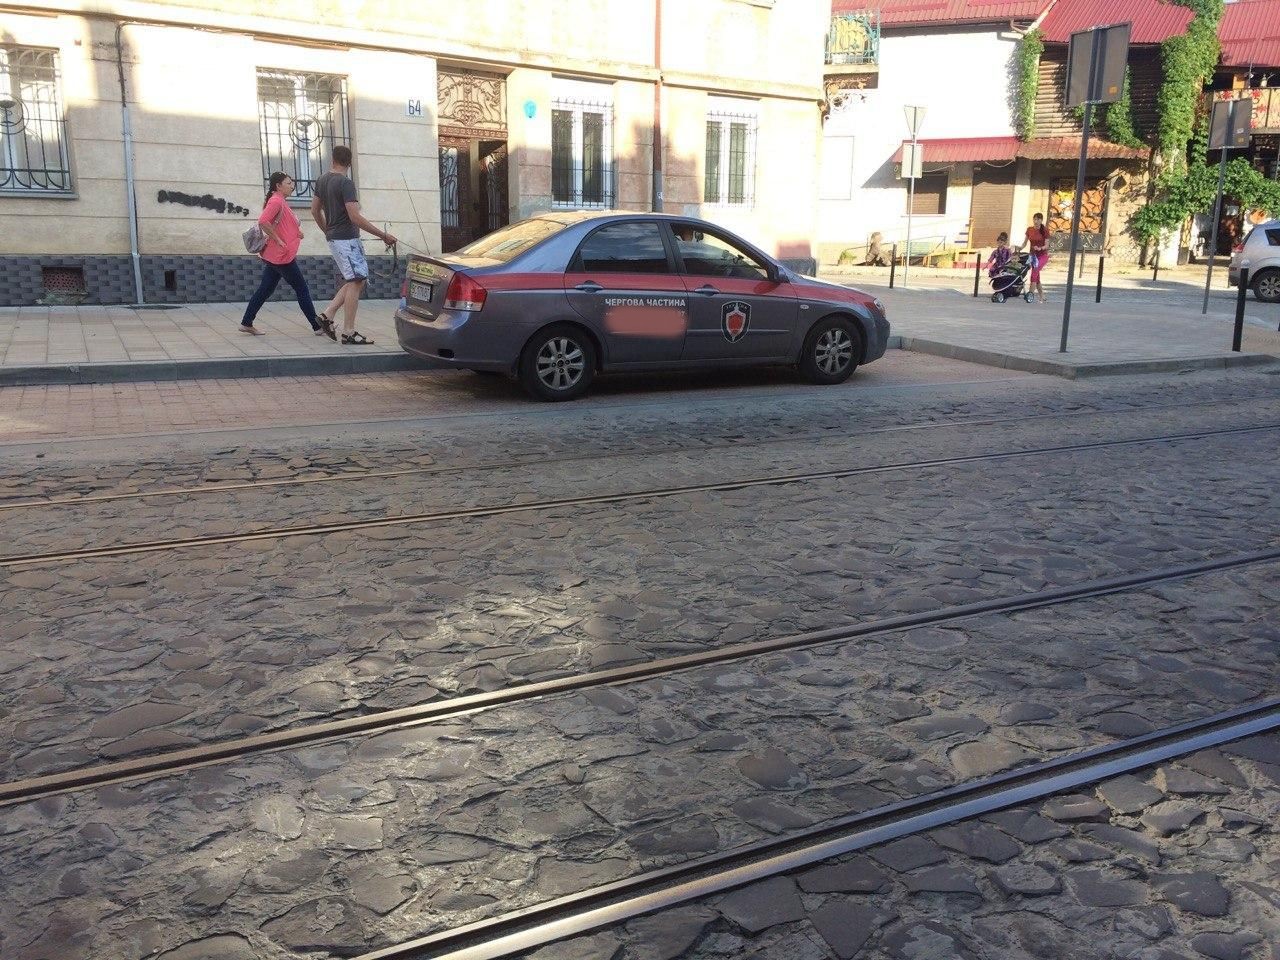 Private security vehicle, Lviv, Ukraine.